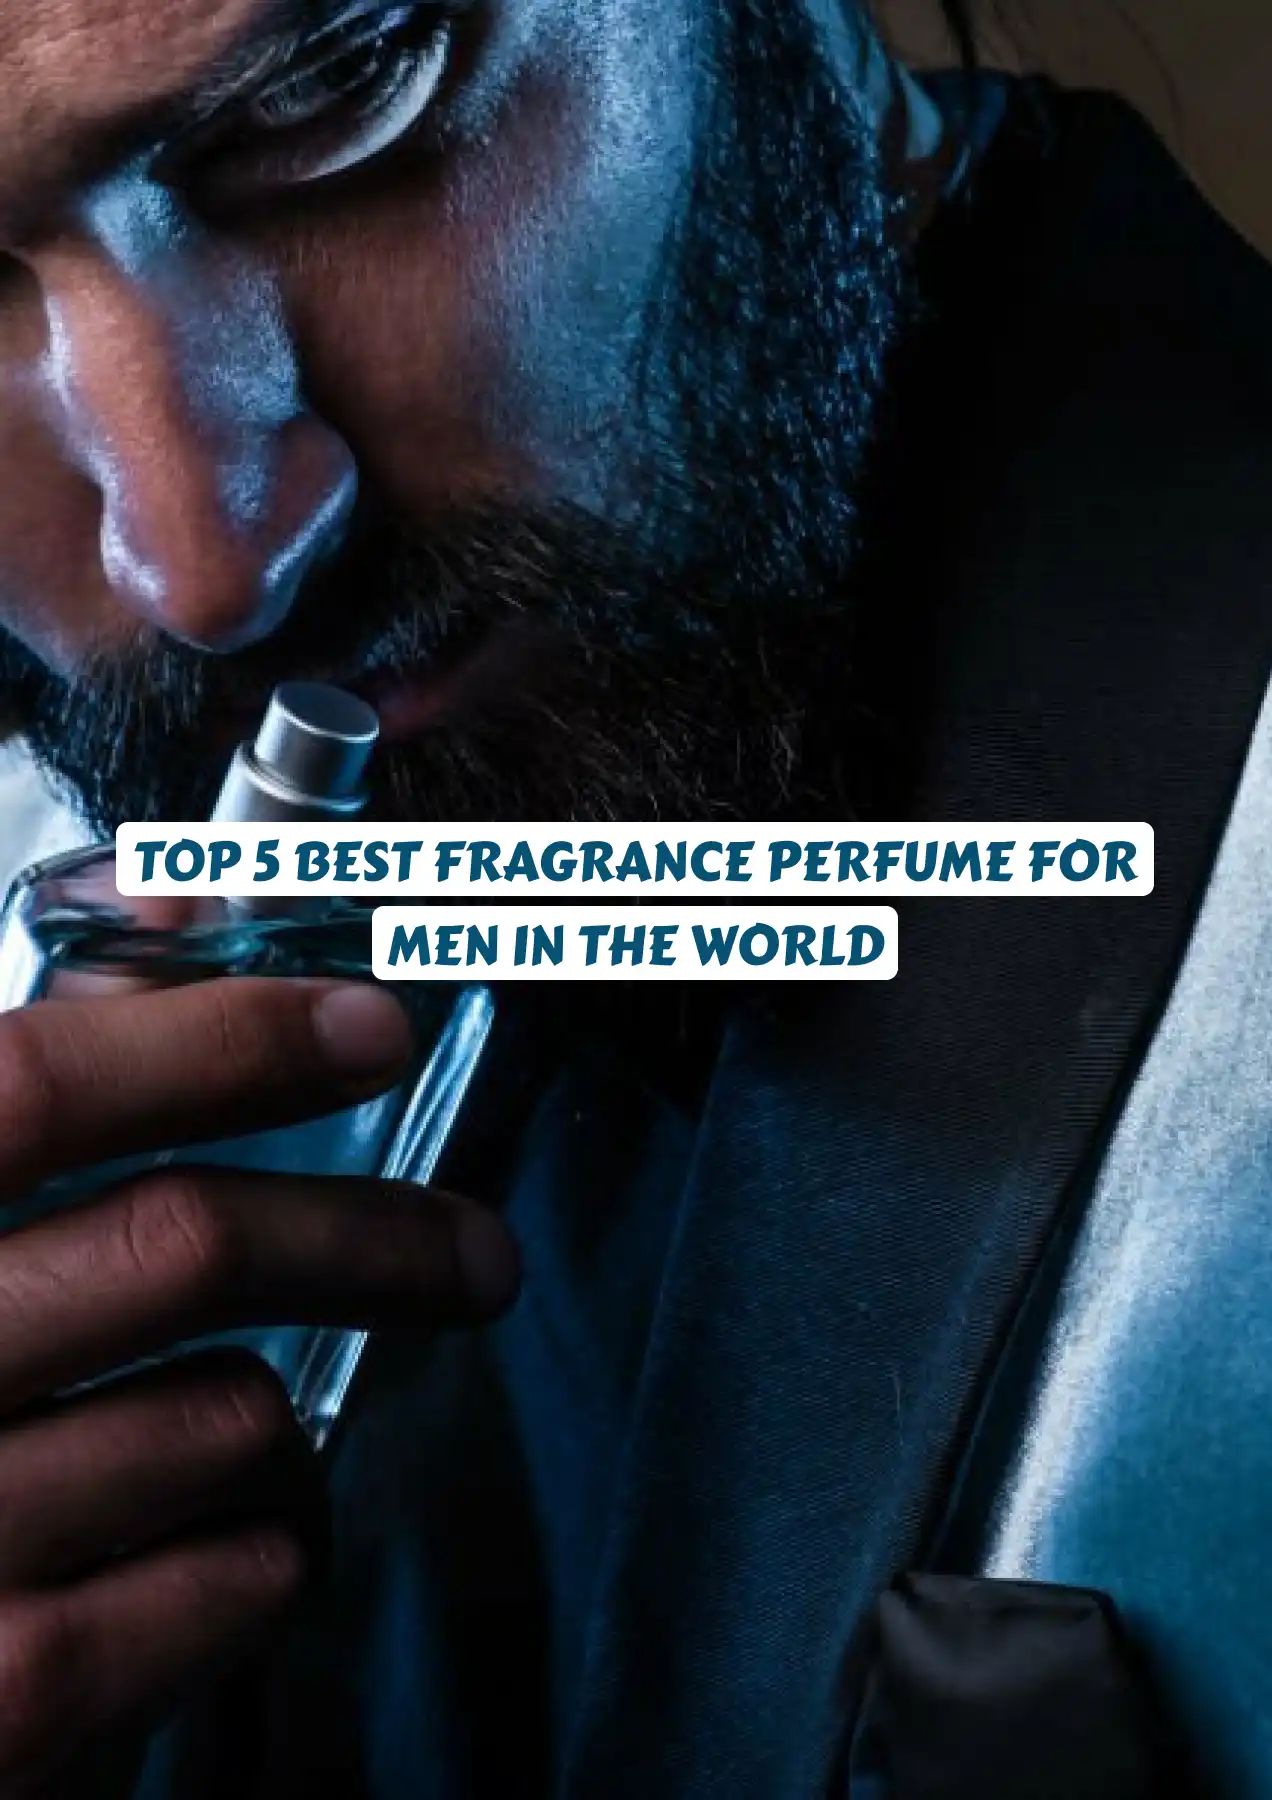 Top 5 best fragrance perfume for men in the world